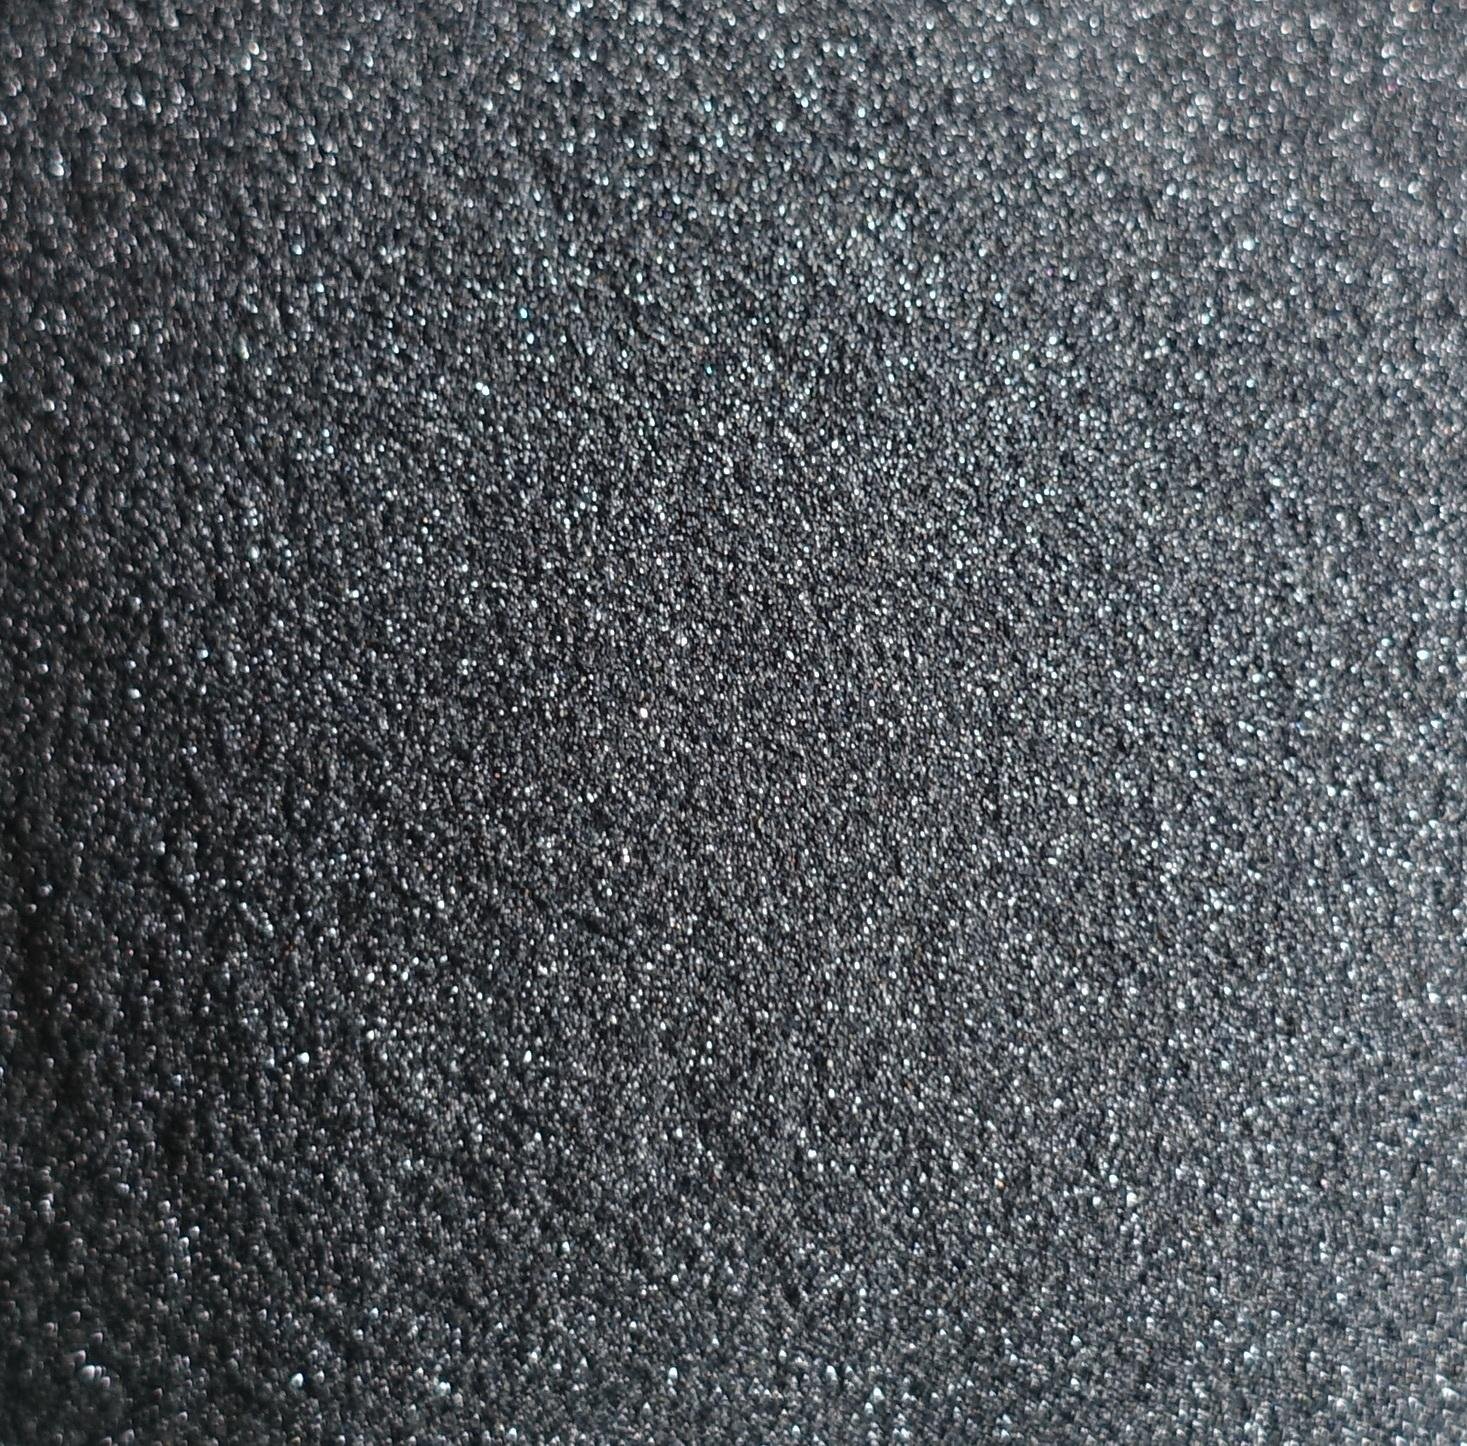 Black silicon cargbide 4